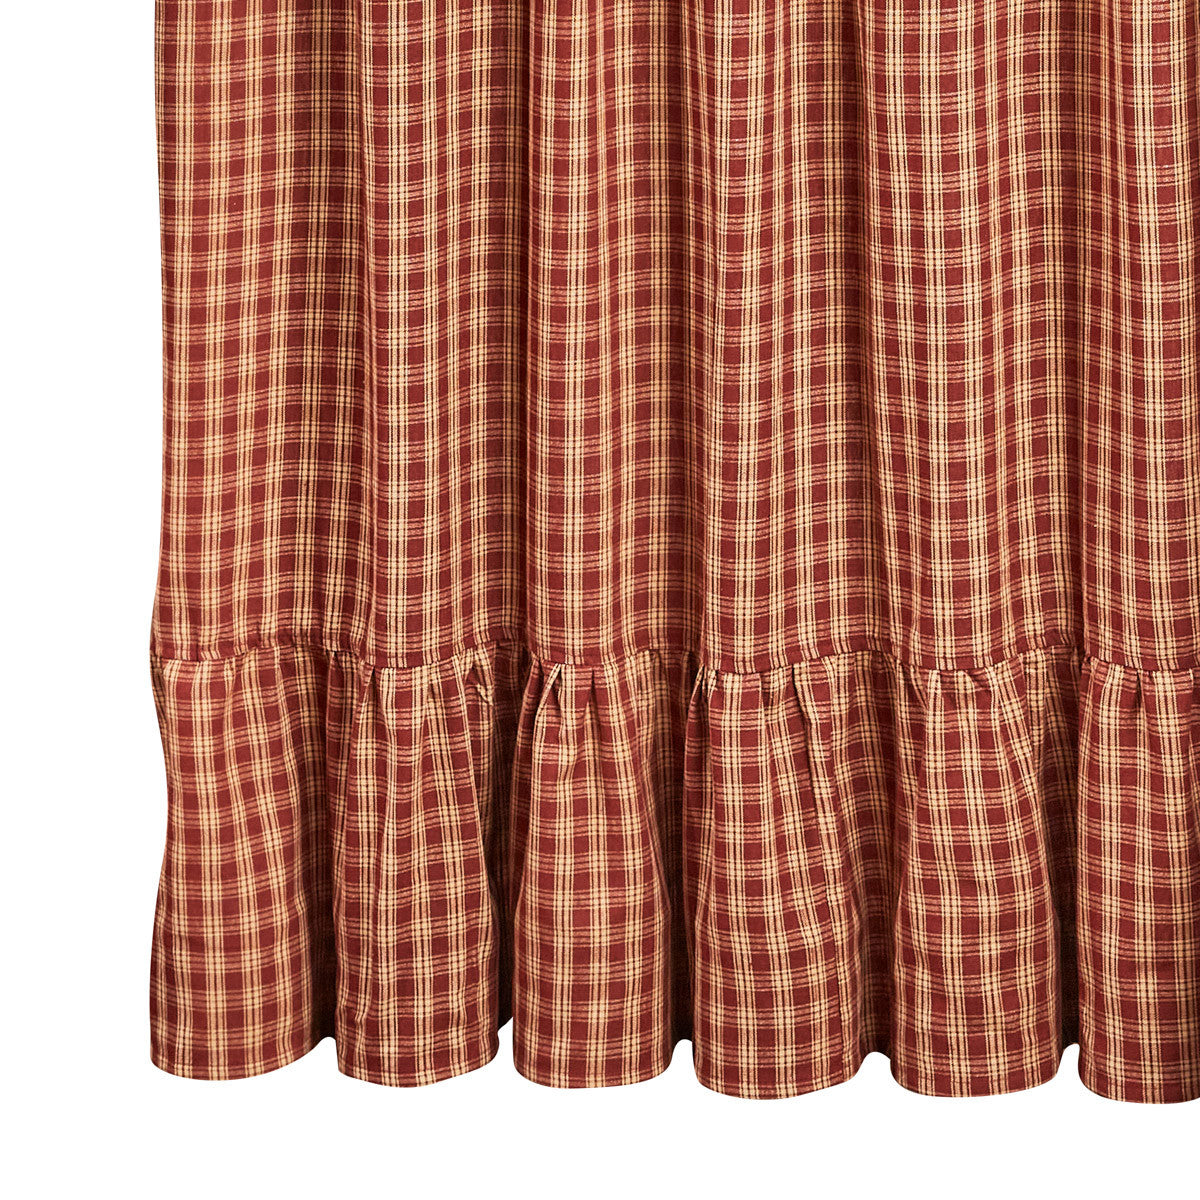 Sturbridge Plaid Ruffle Shower Curtain - Wine 72" X 72"  Park Designs